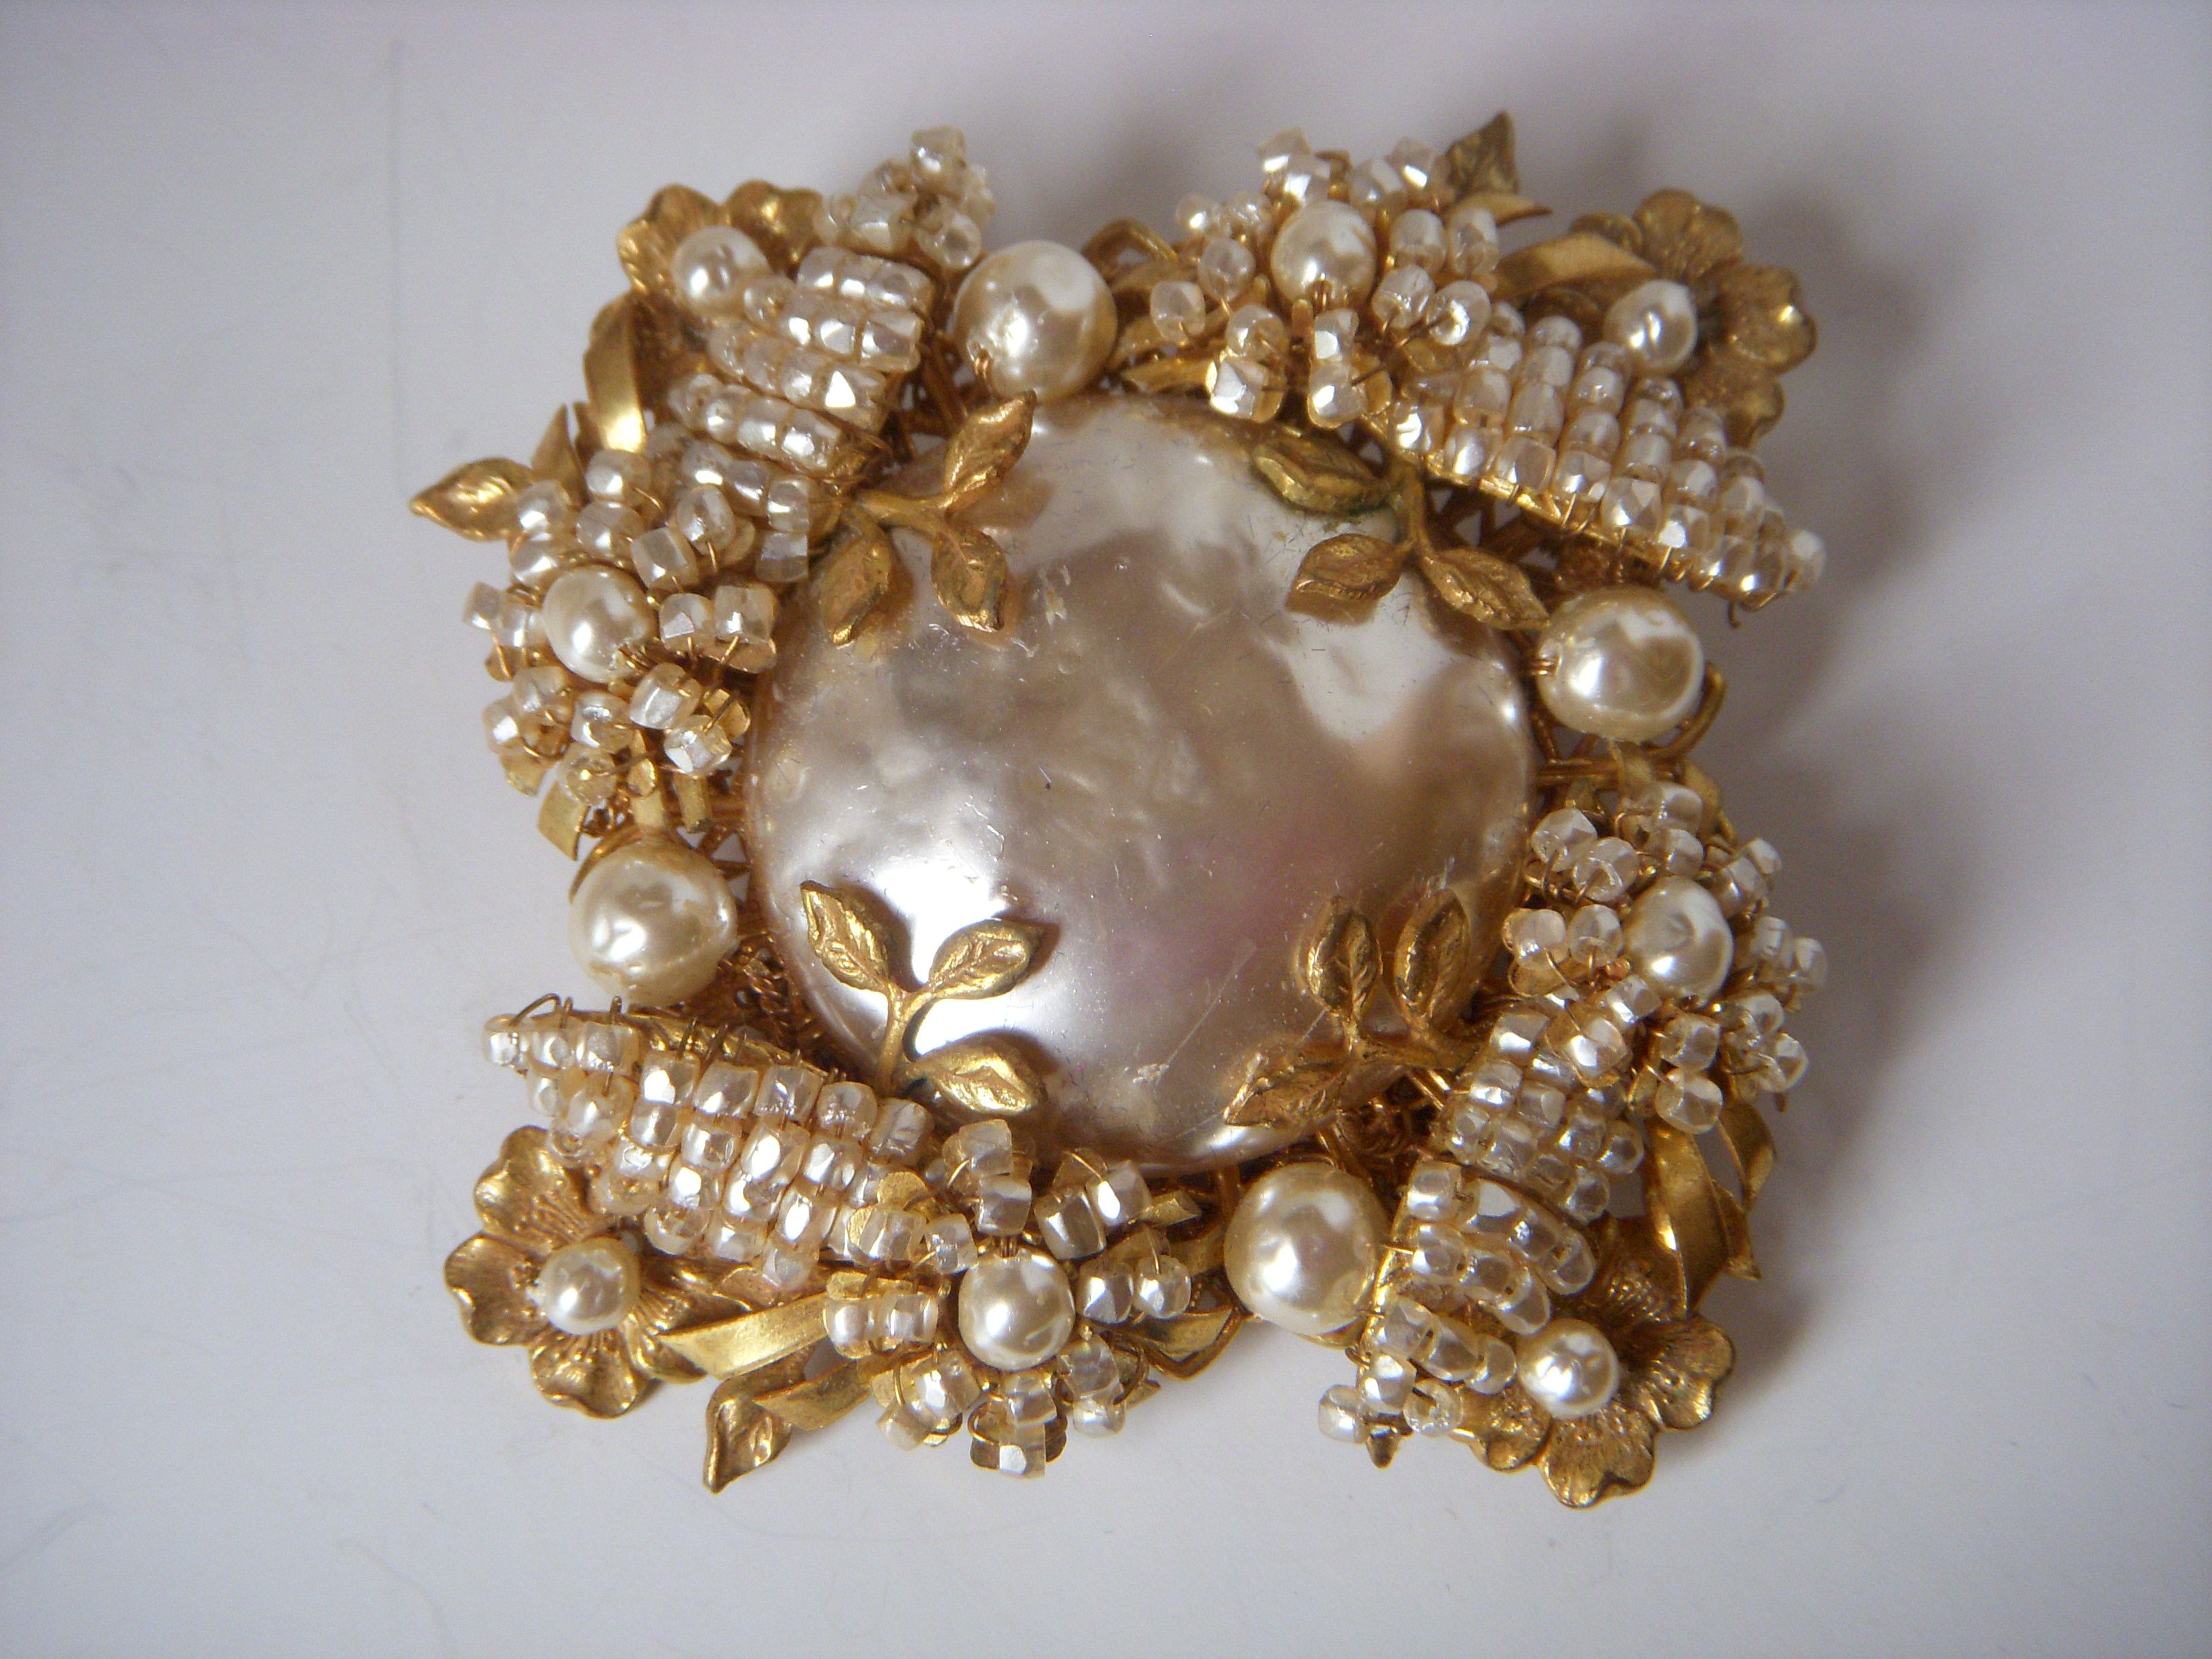 Gorgeous Miriam Haskell vintage brooch | Vintage jewelry | Pinterest ...